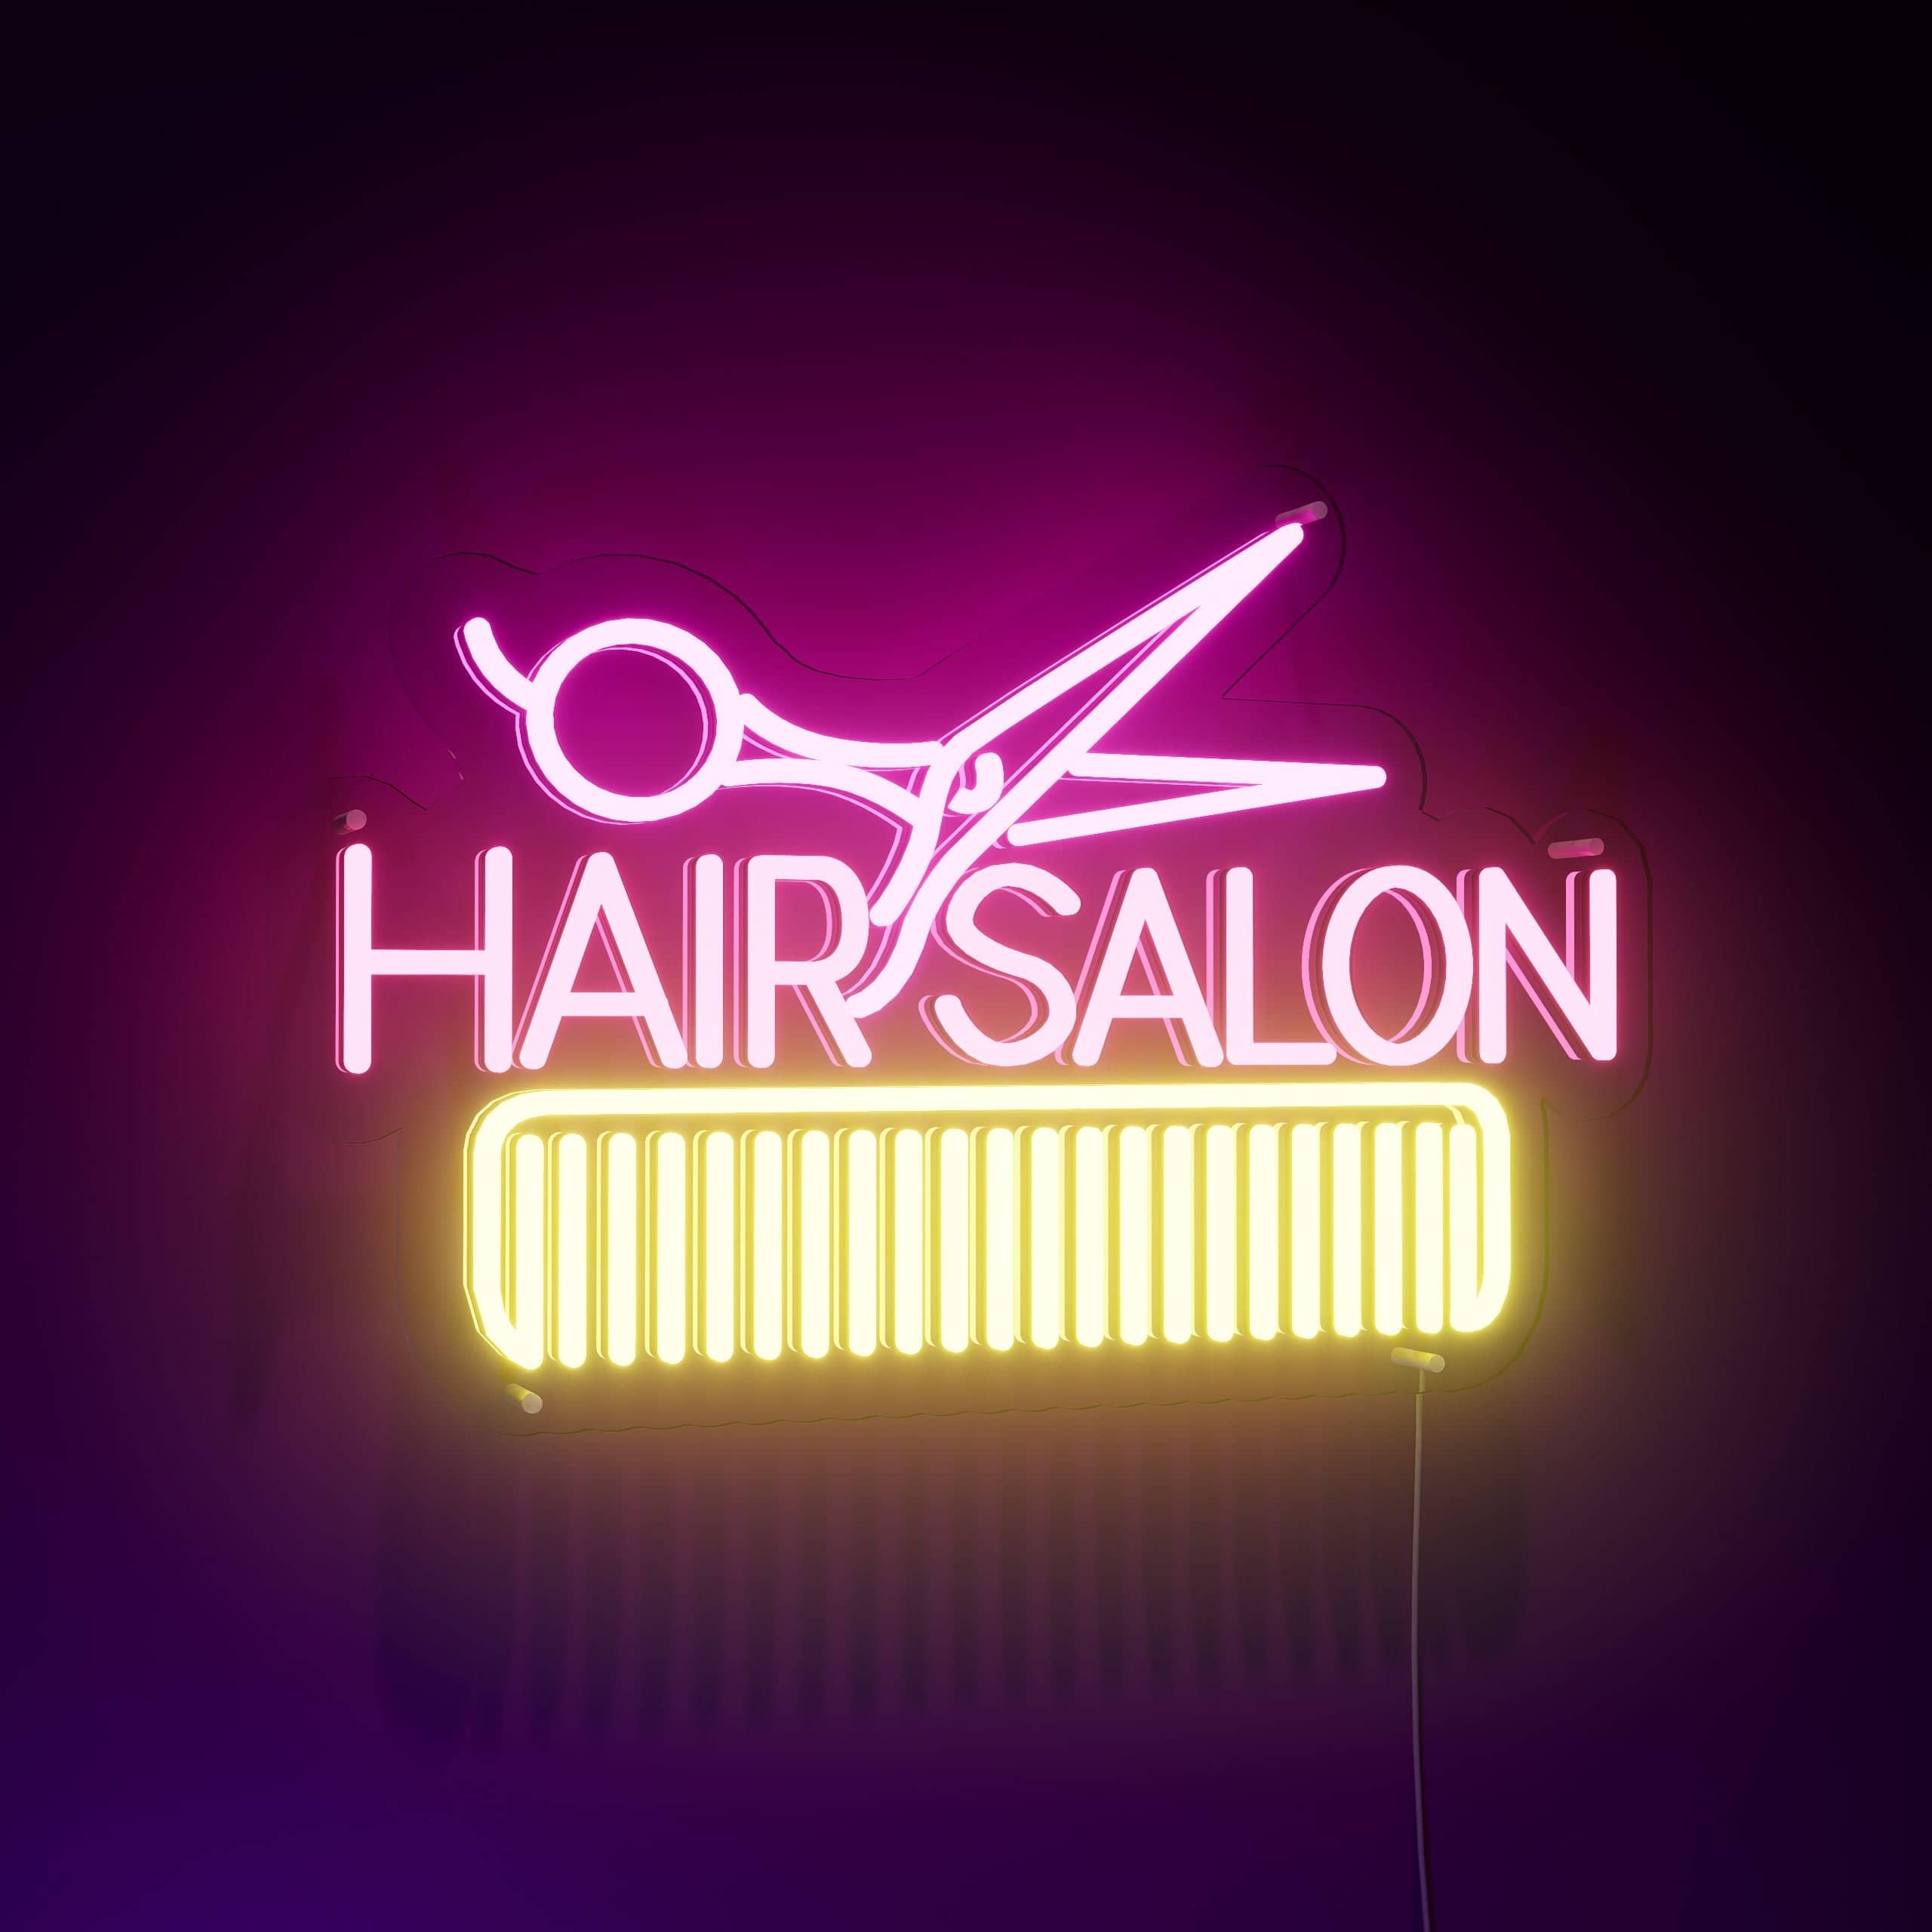 expert-hair-salon-services-neon-sign-lite